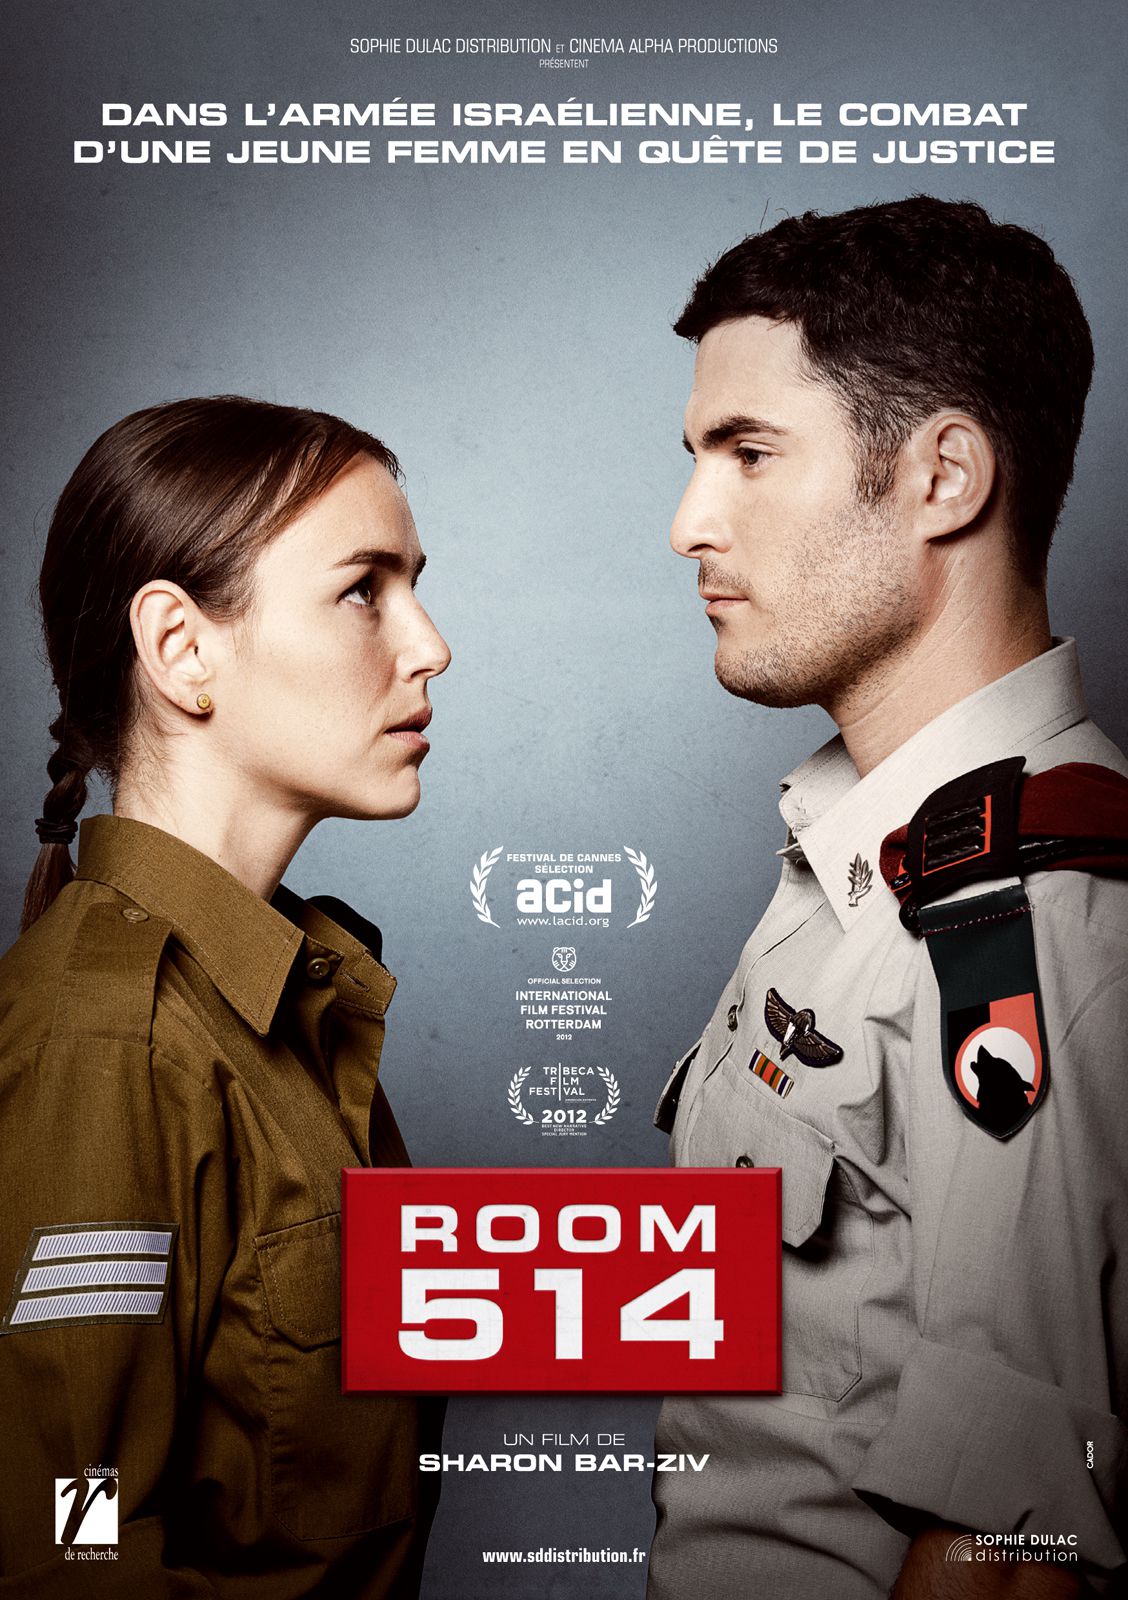 Room 514 - Film (2013) streaming VF gratuit complet